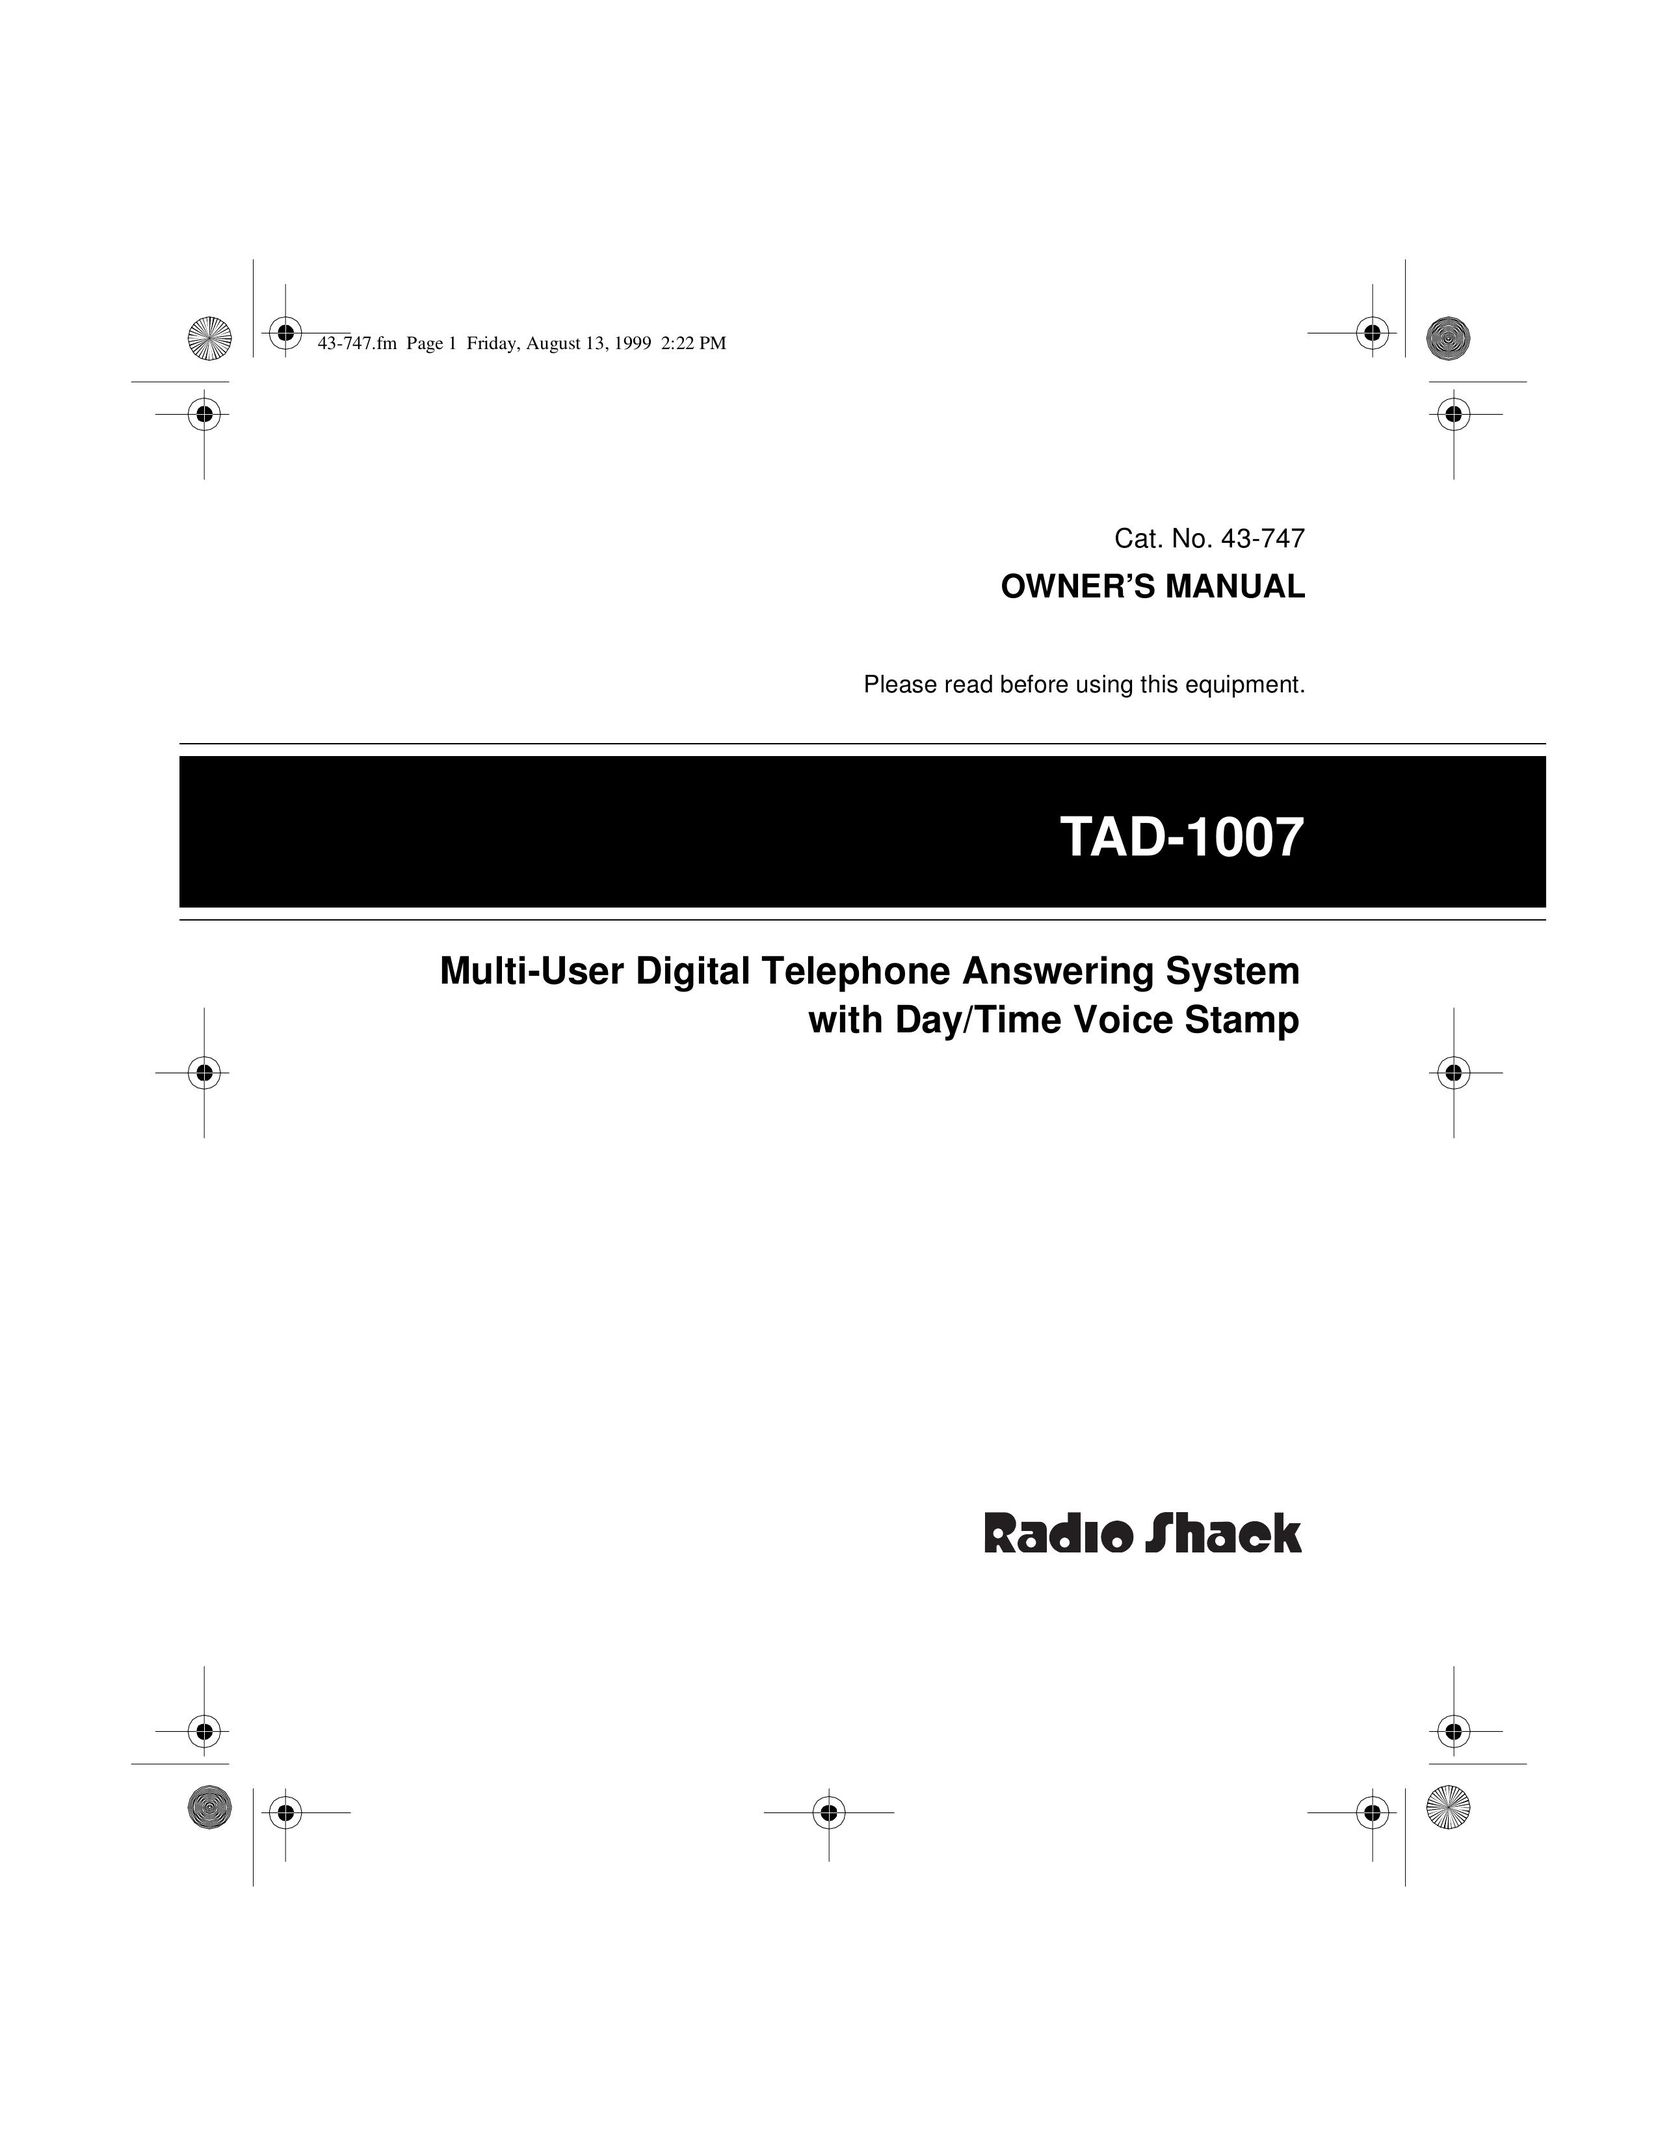 Radio Shack TAD-1007 Answering Machine User Manual